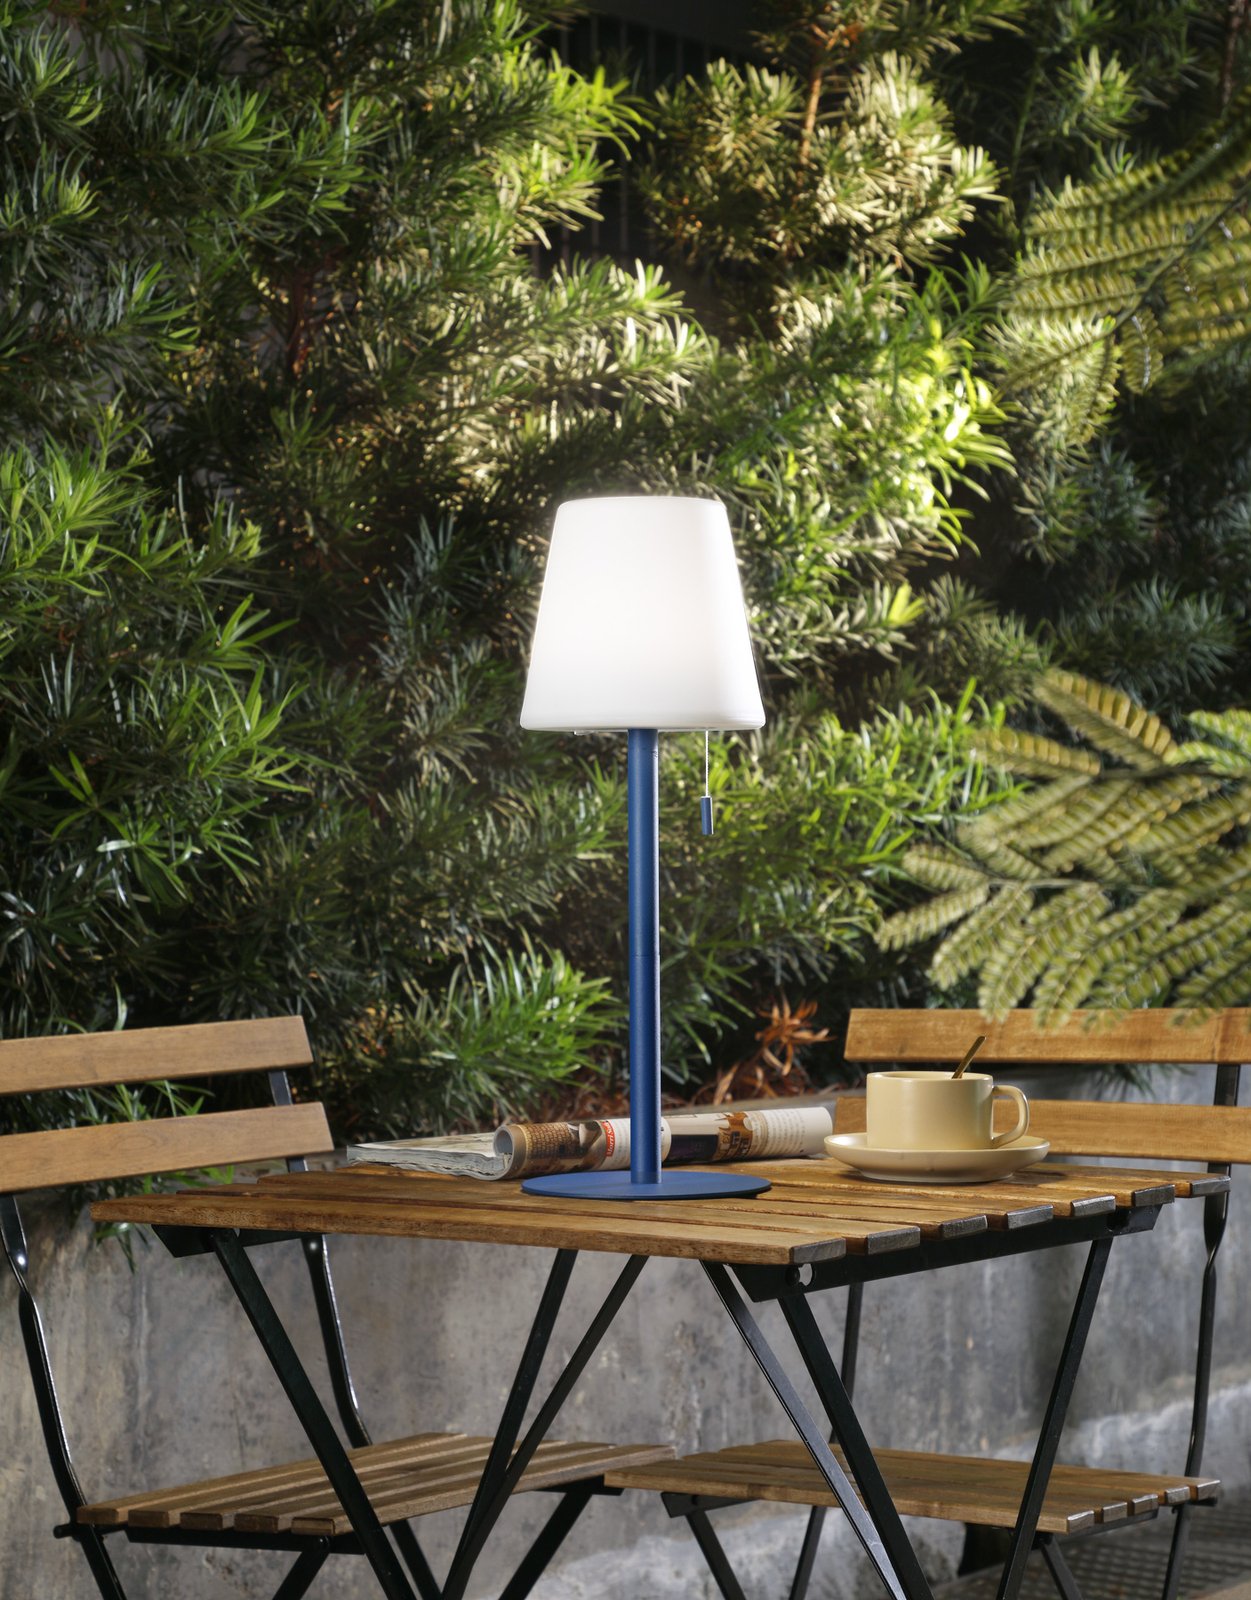 Lindby LED rechargeable lamp Azalea blue aluminium CCT height-adjustable